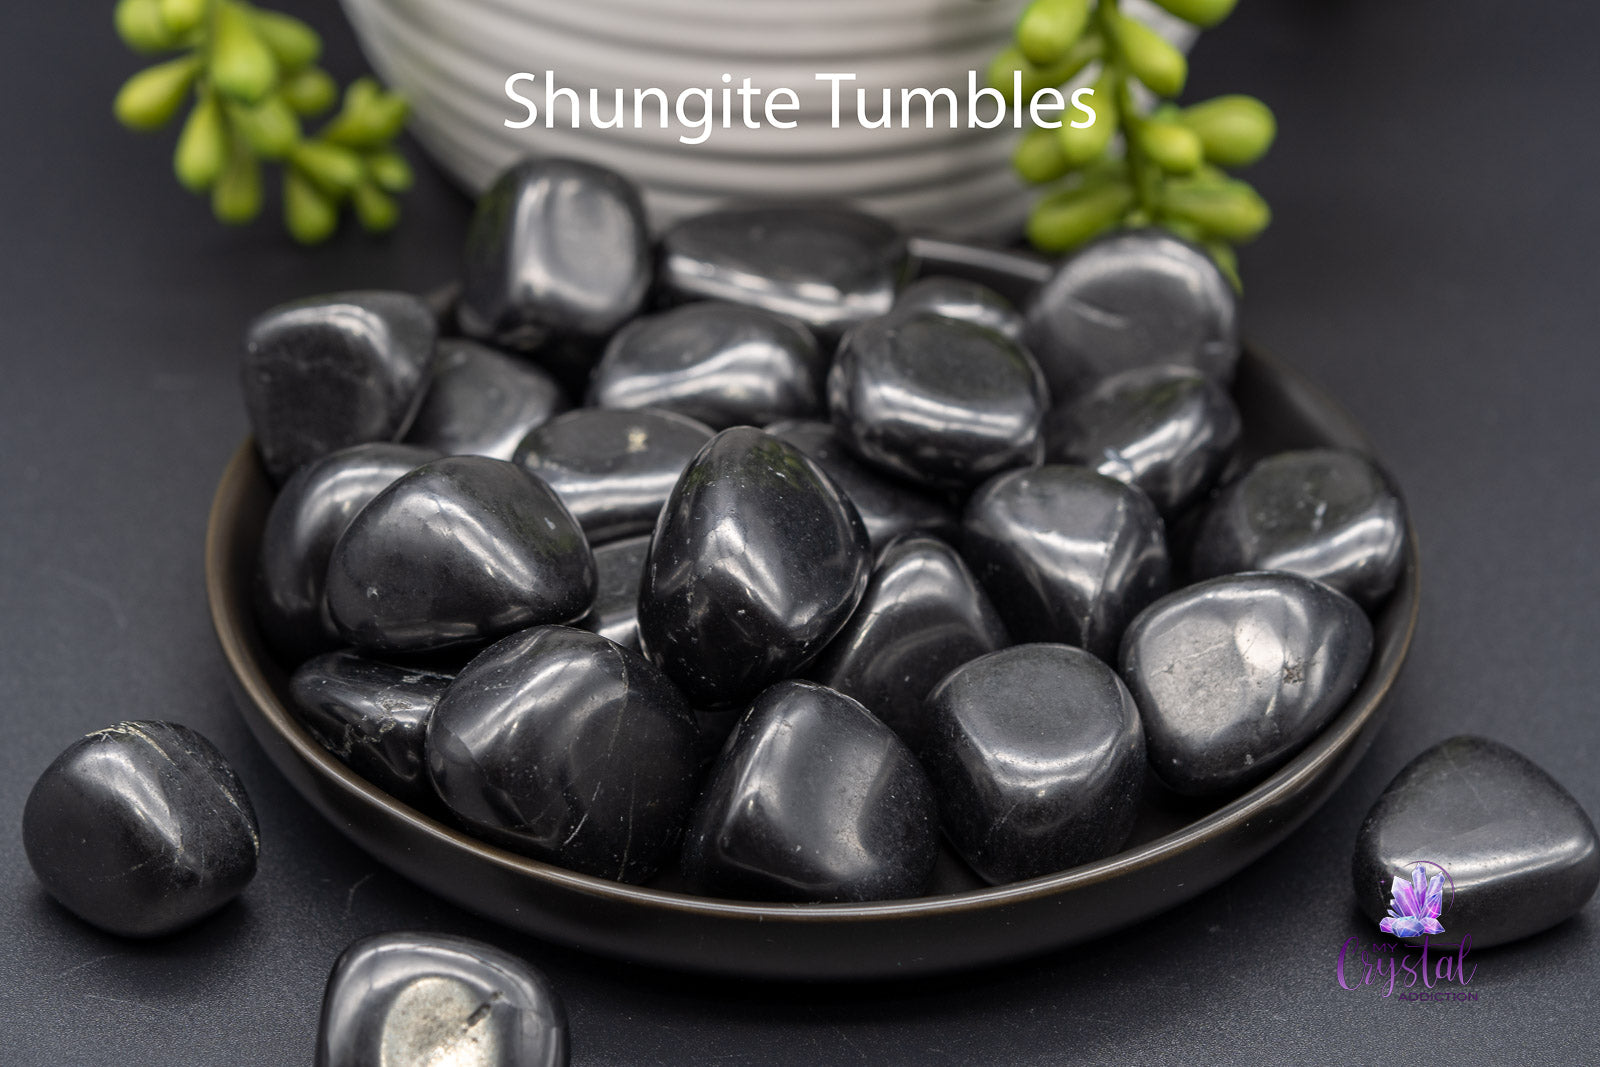 Shungite Tumbles - My Crystal Addiction